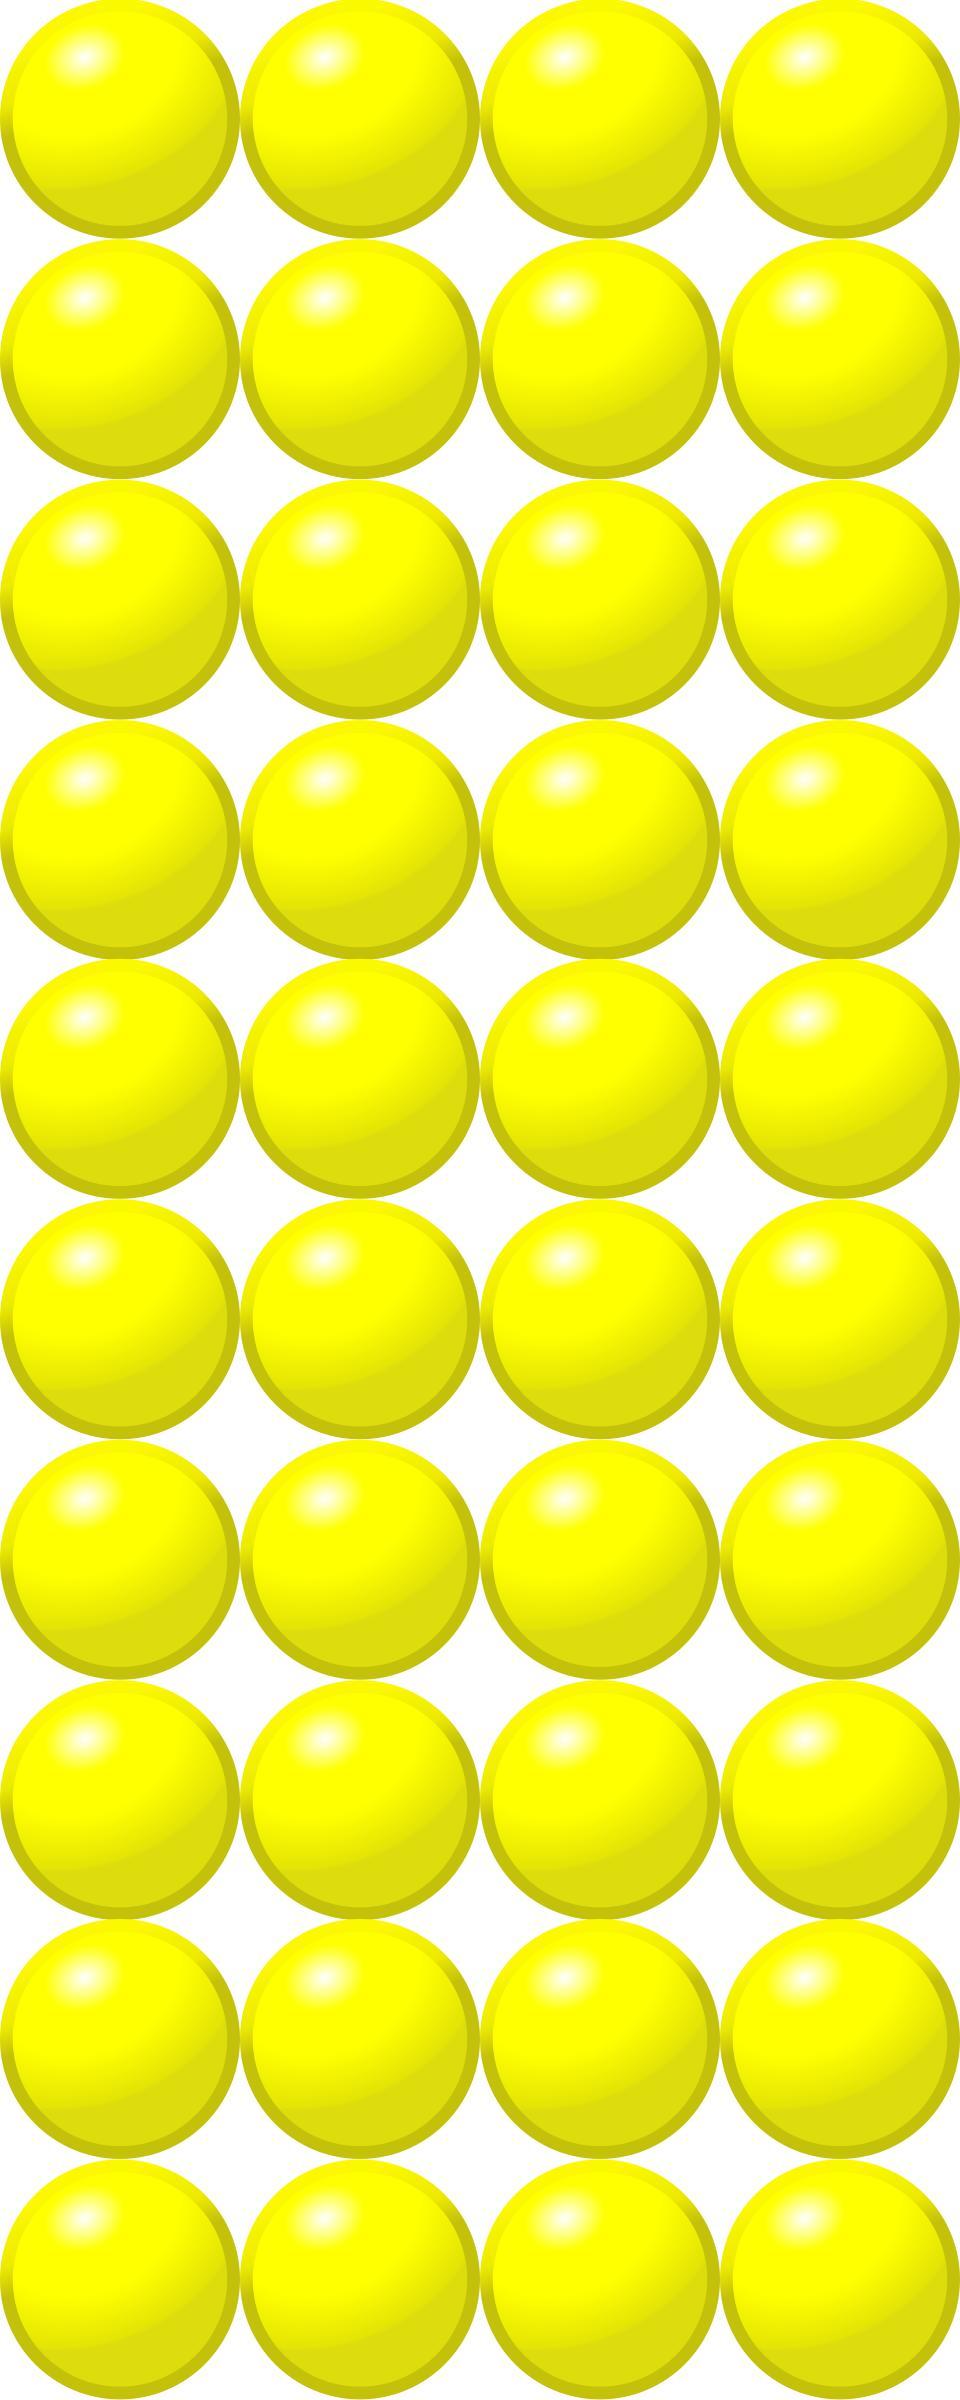 Beads quantitative picture for multiplication 10x4 png transparent